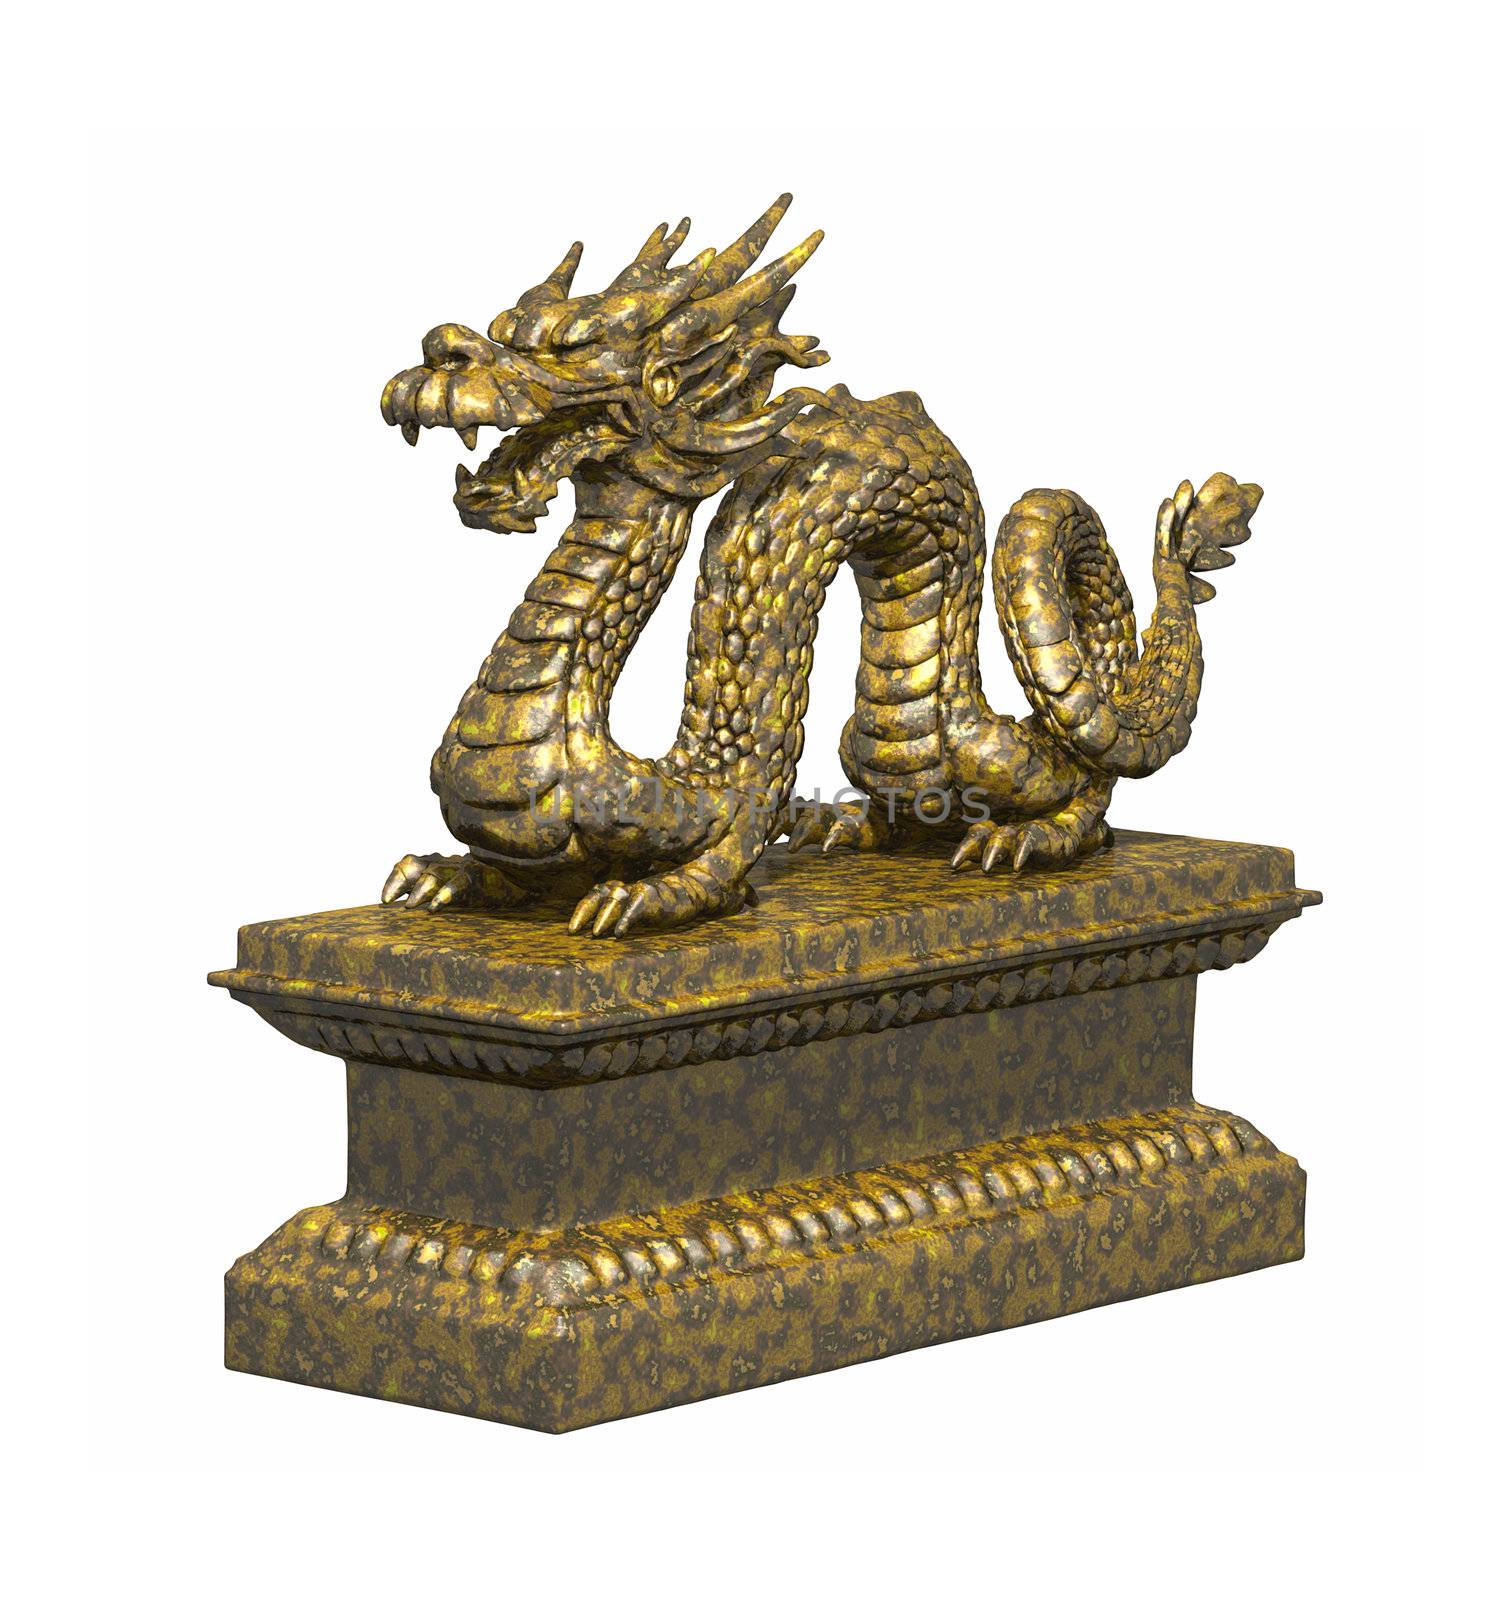 An image of a nice golden dragon sculpture